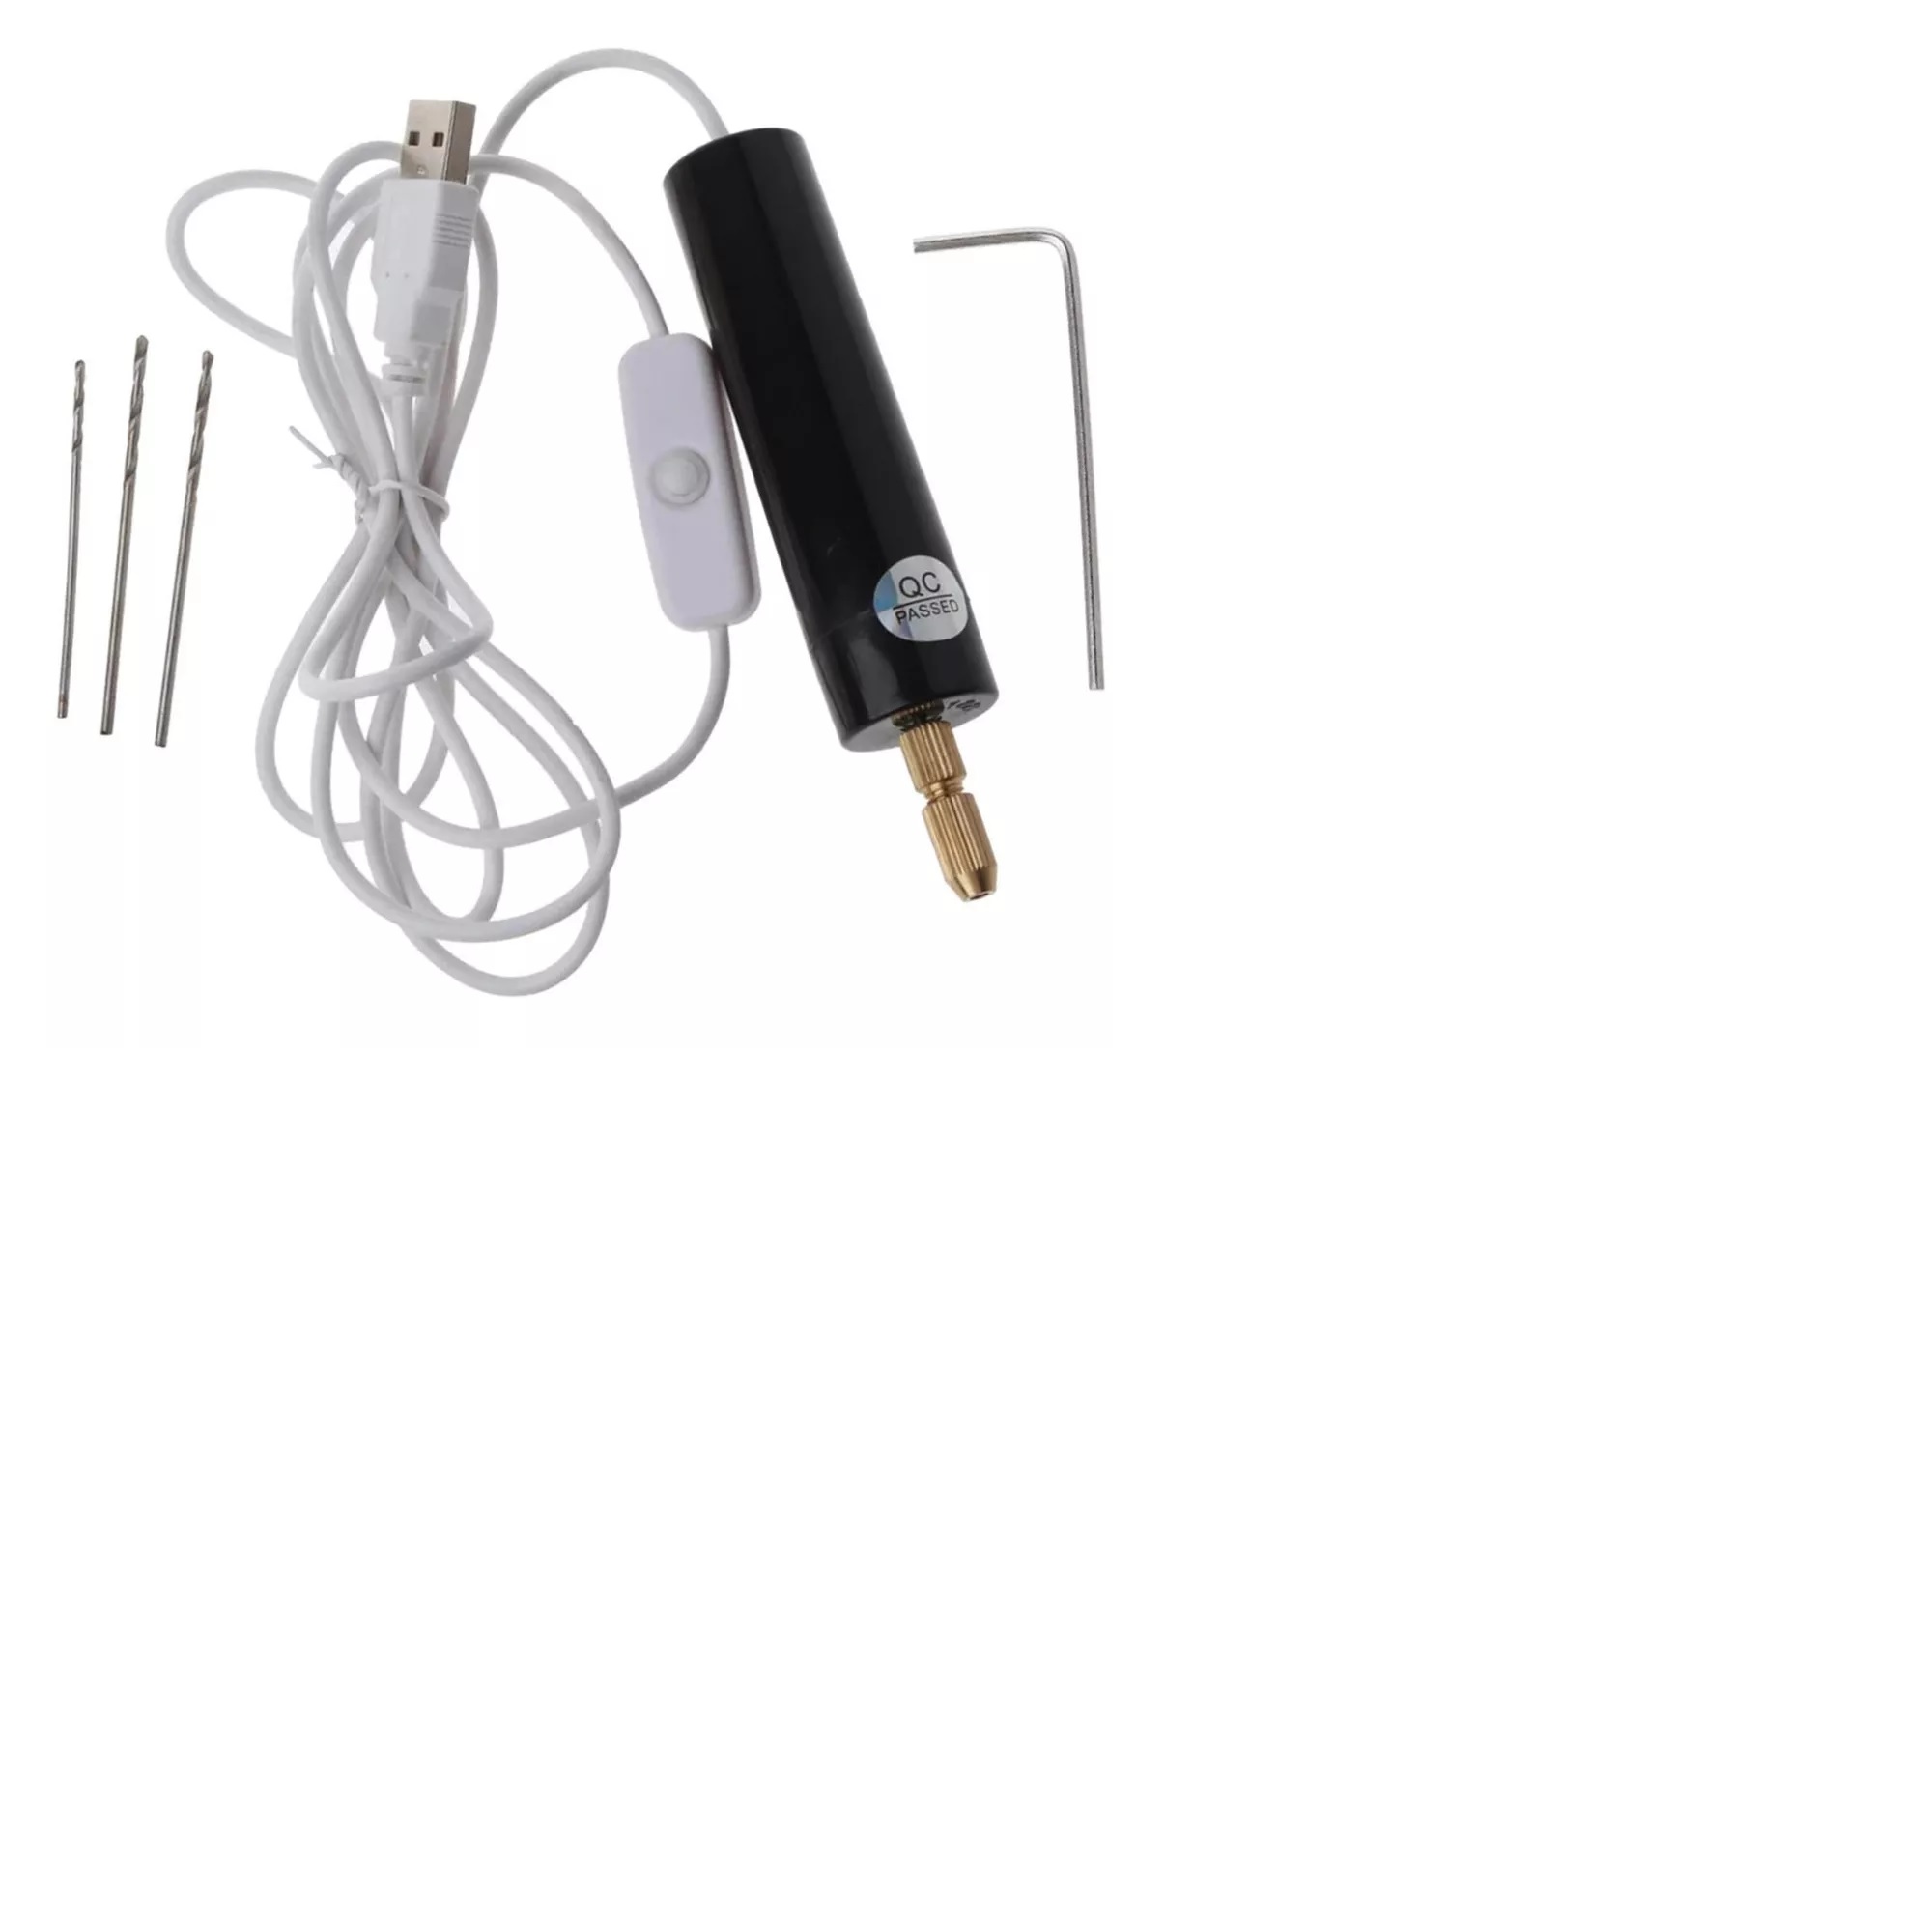 Mini Taladro eléctrico carga USB (MT0102) ✔️ Carmina Hobbys ®